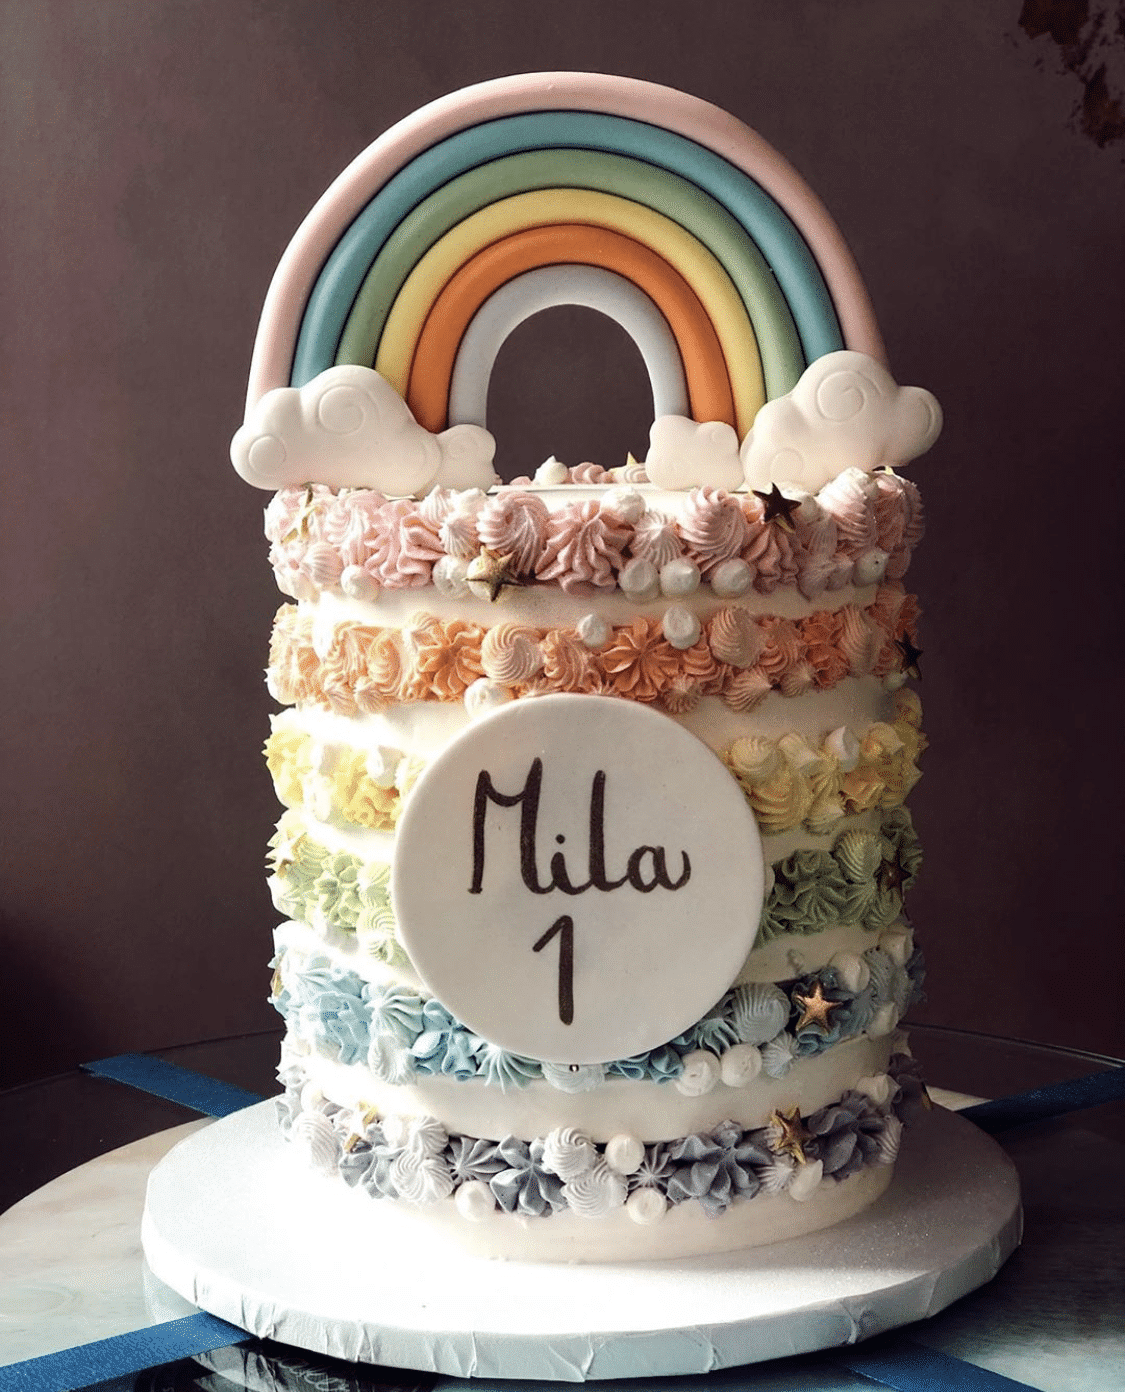 DBakers Miami, Florida amazing special occasion birthday cake rainbow cake